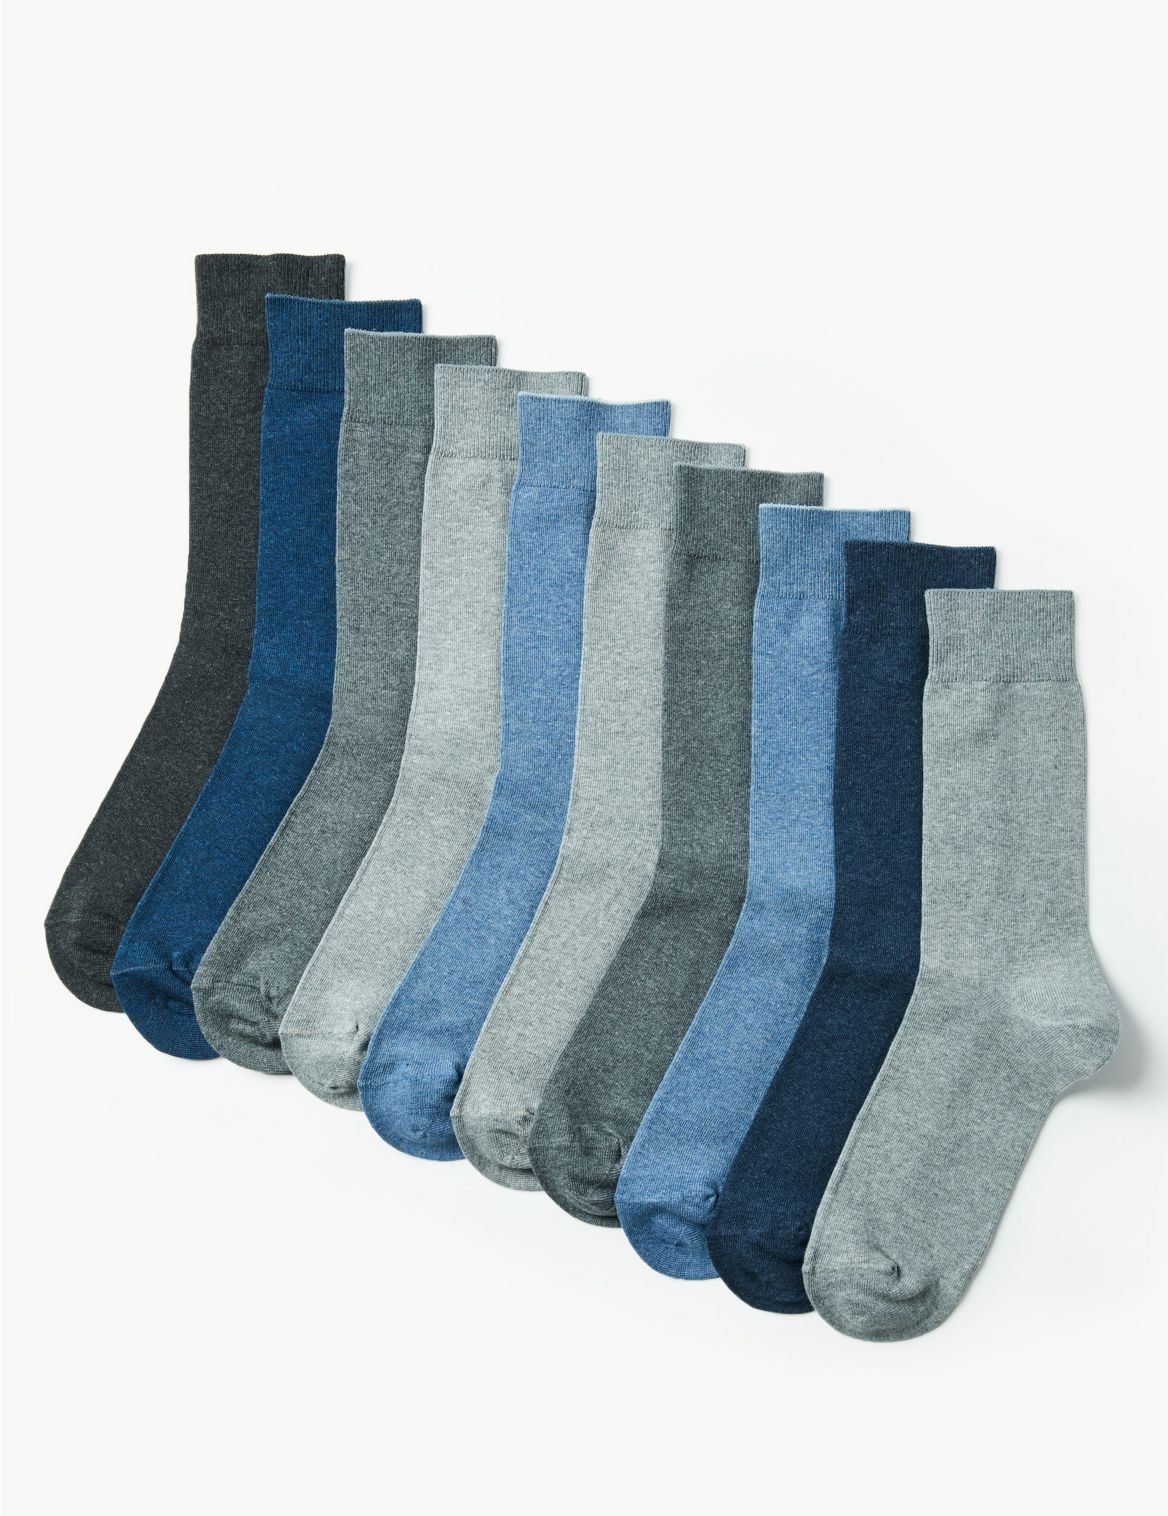 StyleProduct Style: Cool & freshfeet socks;Freshfeet&trade; ;Added stretch